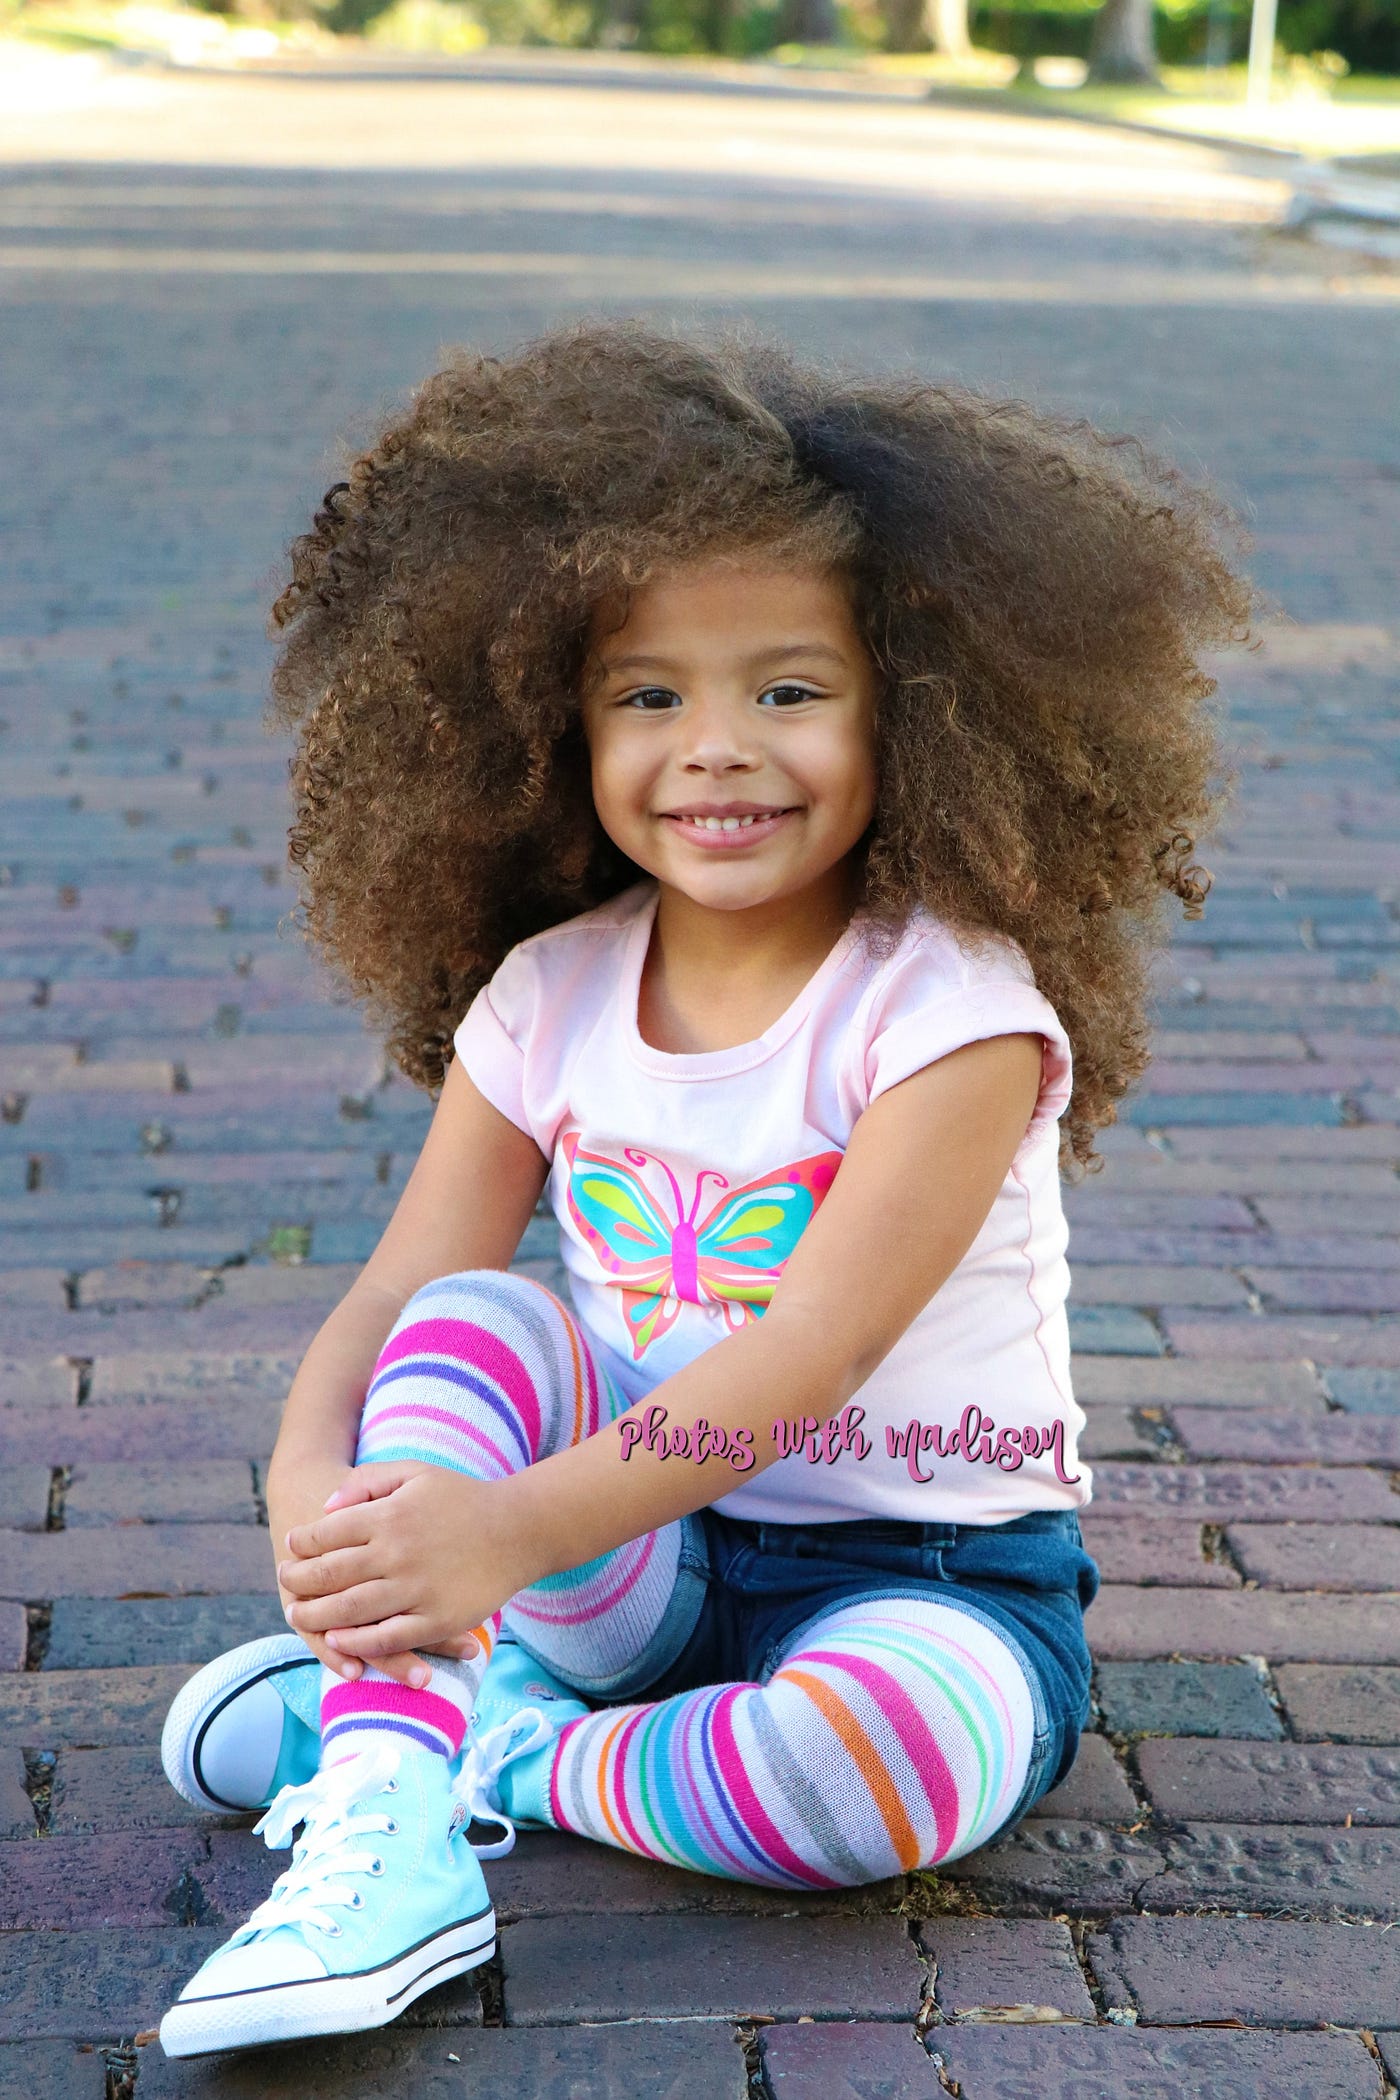 Little Girl. Big Dreams.. I met 3 year old Vianey “Lilly” Salazar